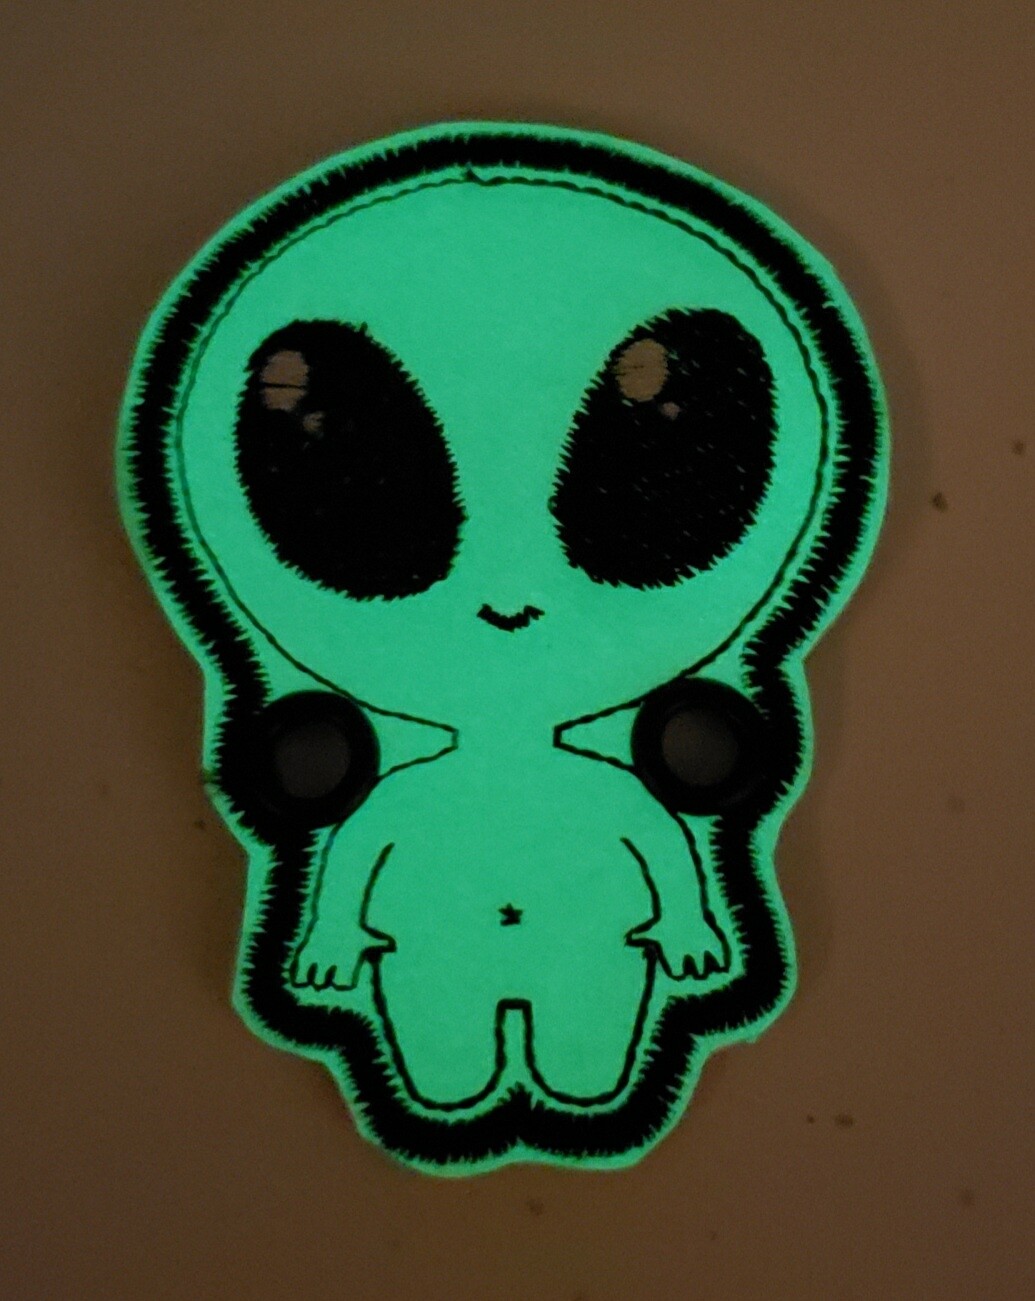 Alien chibi style glow skate/shoe lace accessory - glow fabric